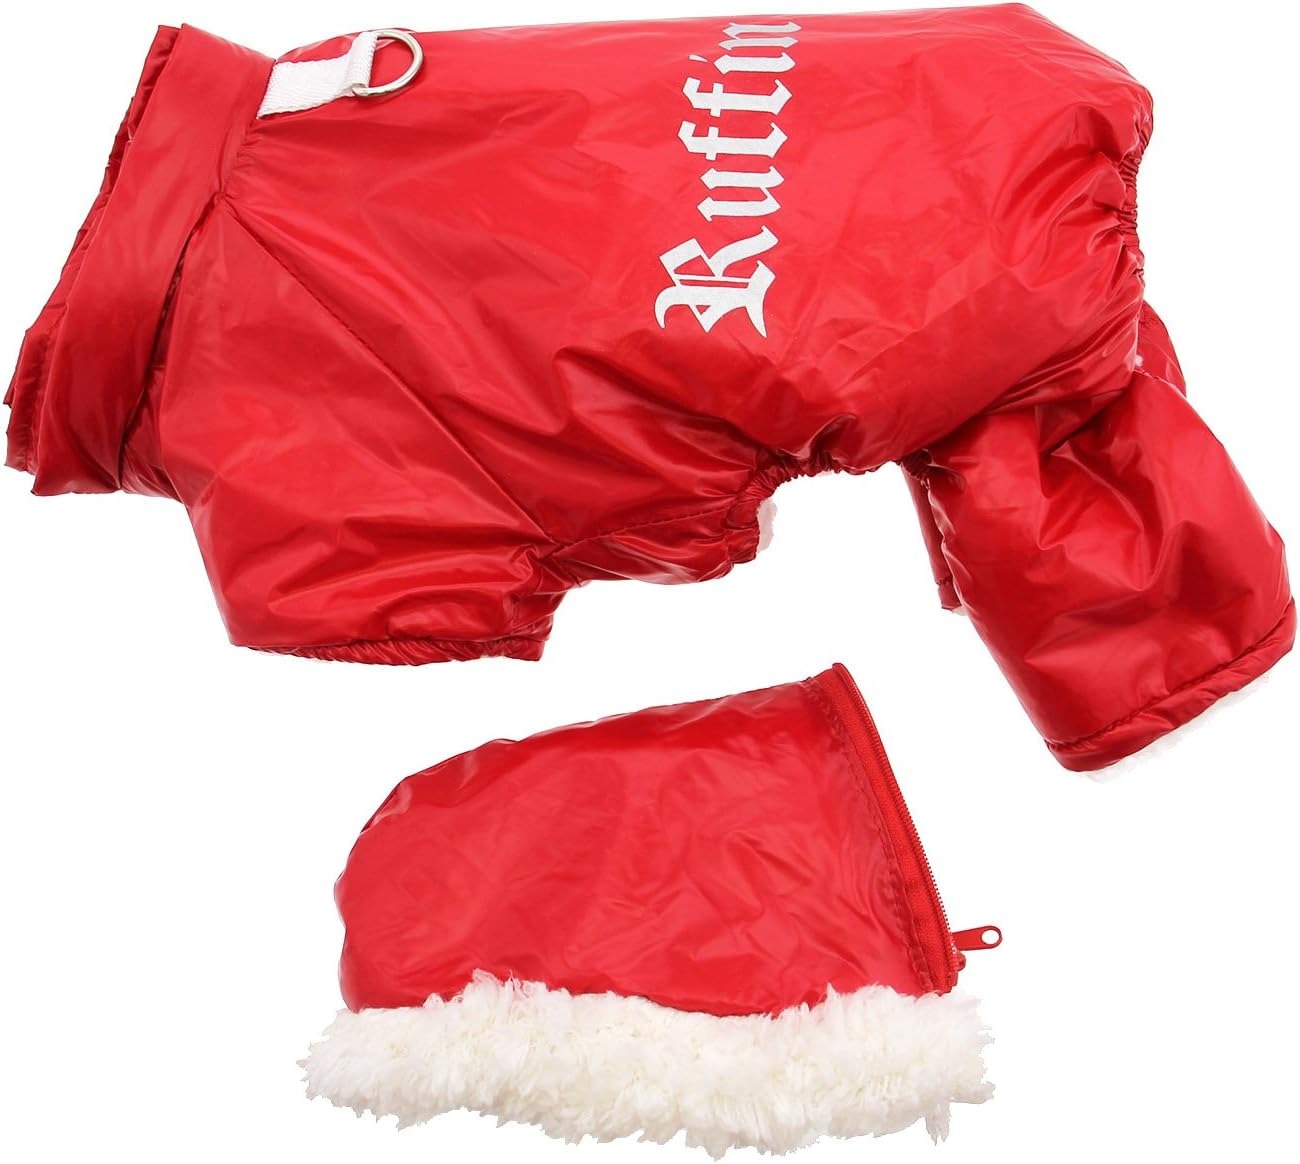 Doggie Design Red Ruffin It Dog Snow Suit Harness (Medium)…